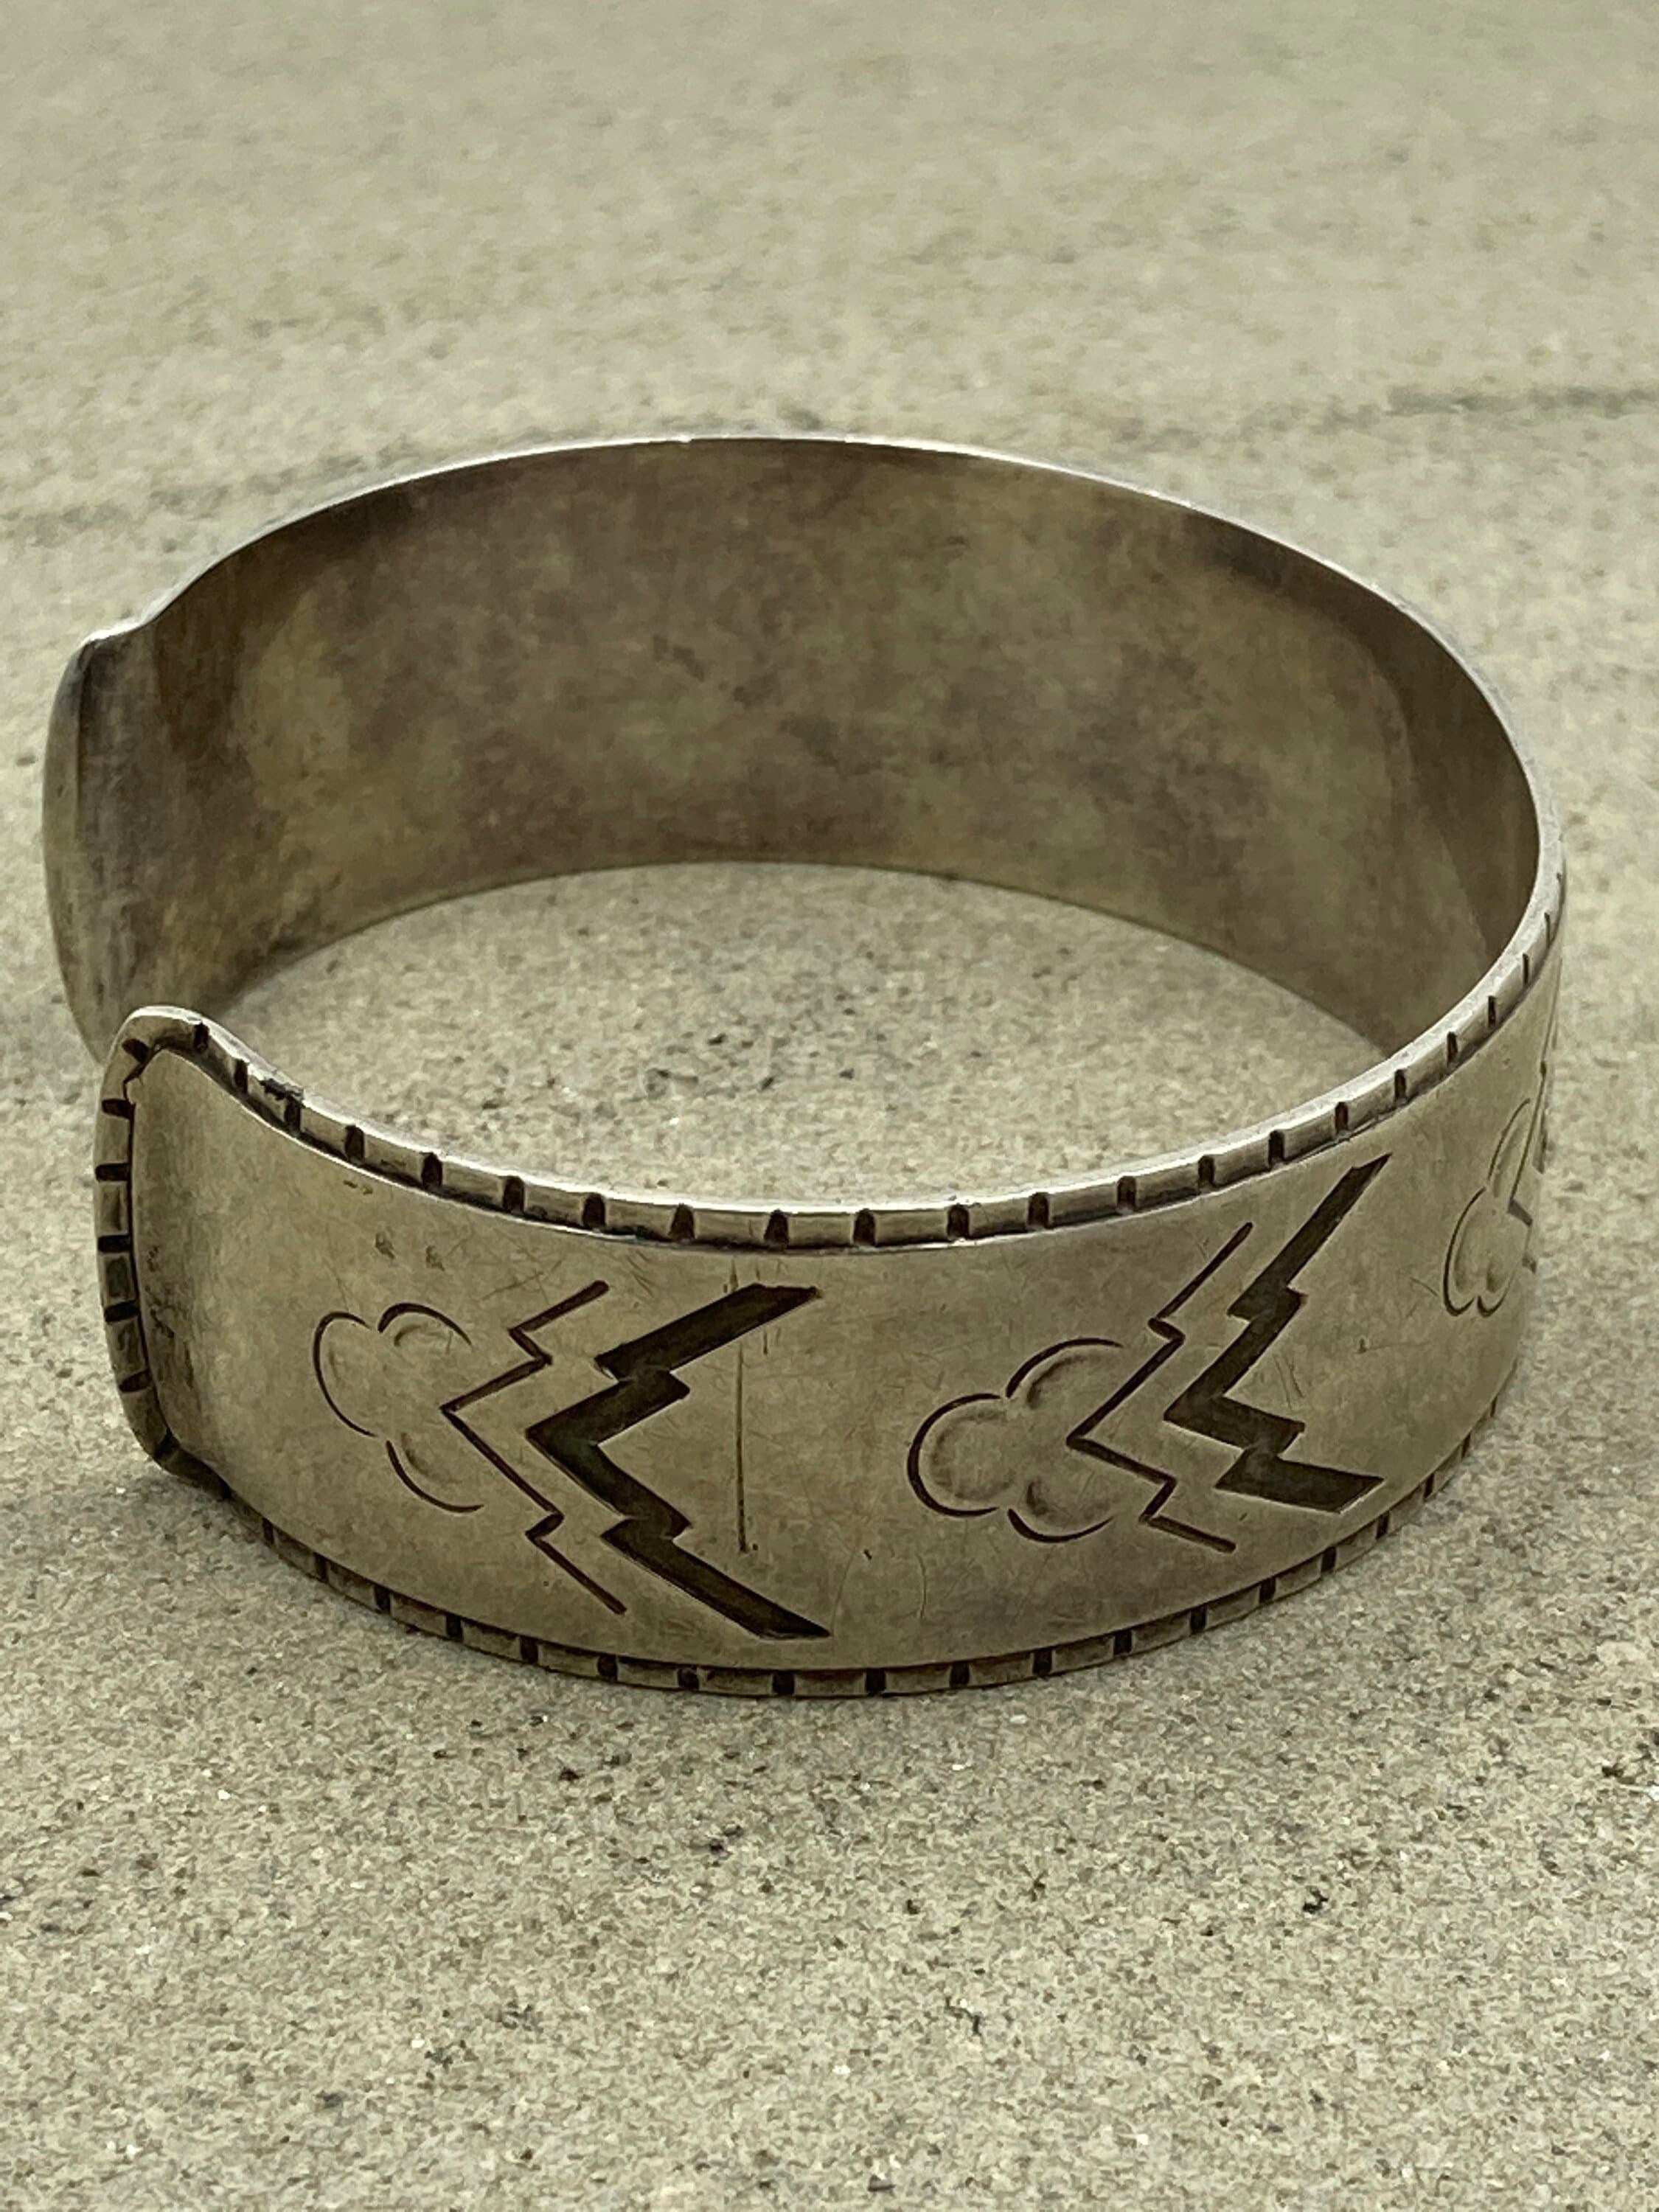 Vintage georg jensen cuff bangle bracelet no. 38 art deco motifs signed post 1945 mark